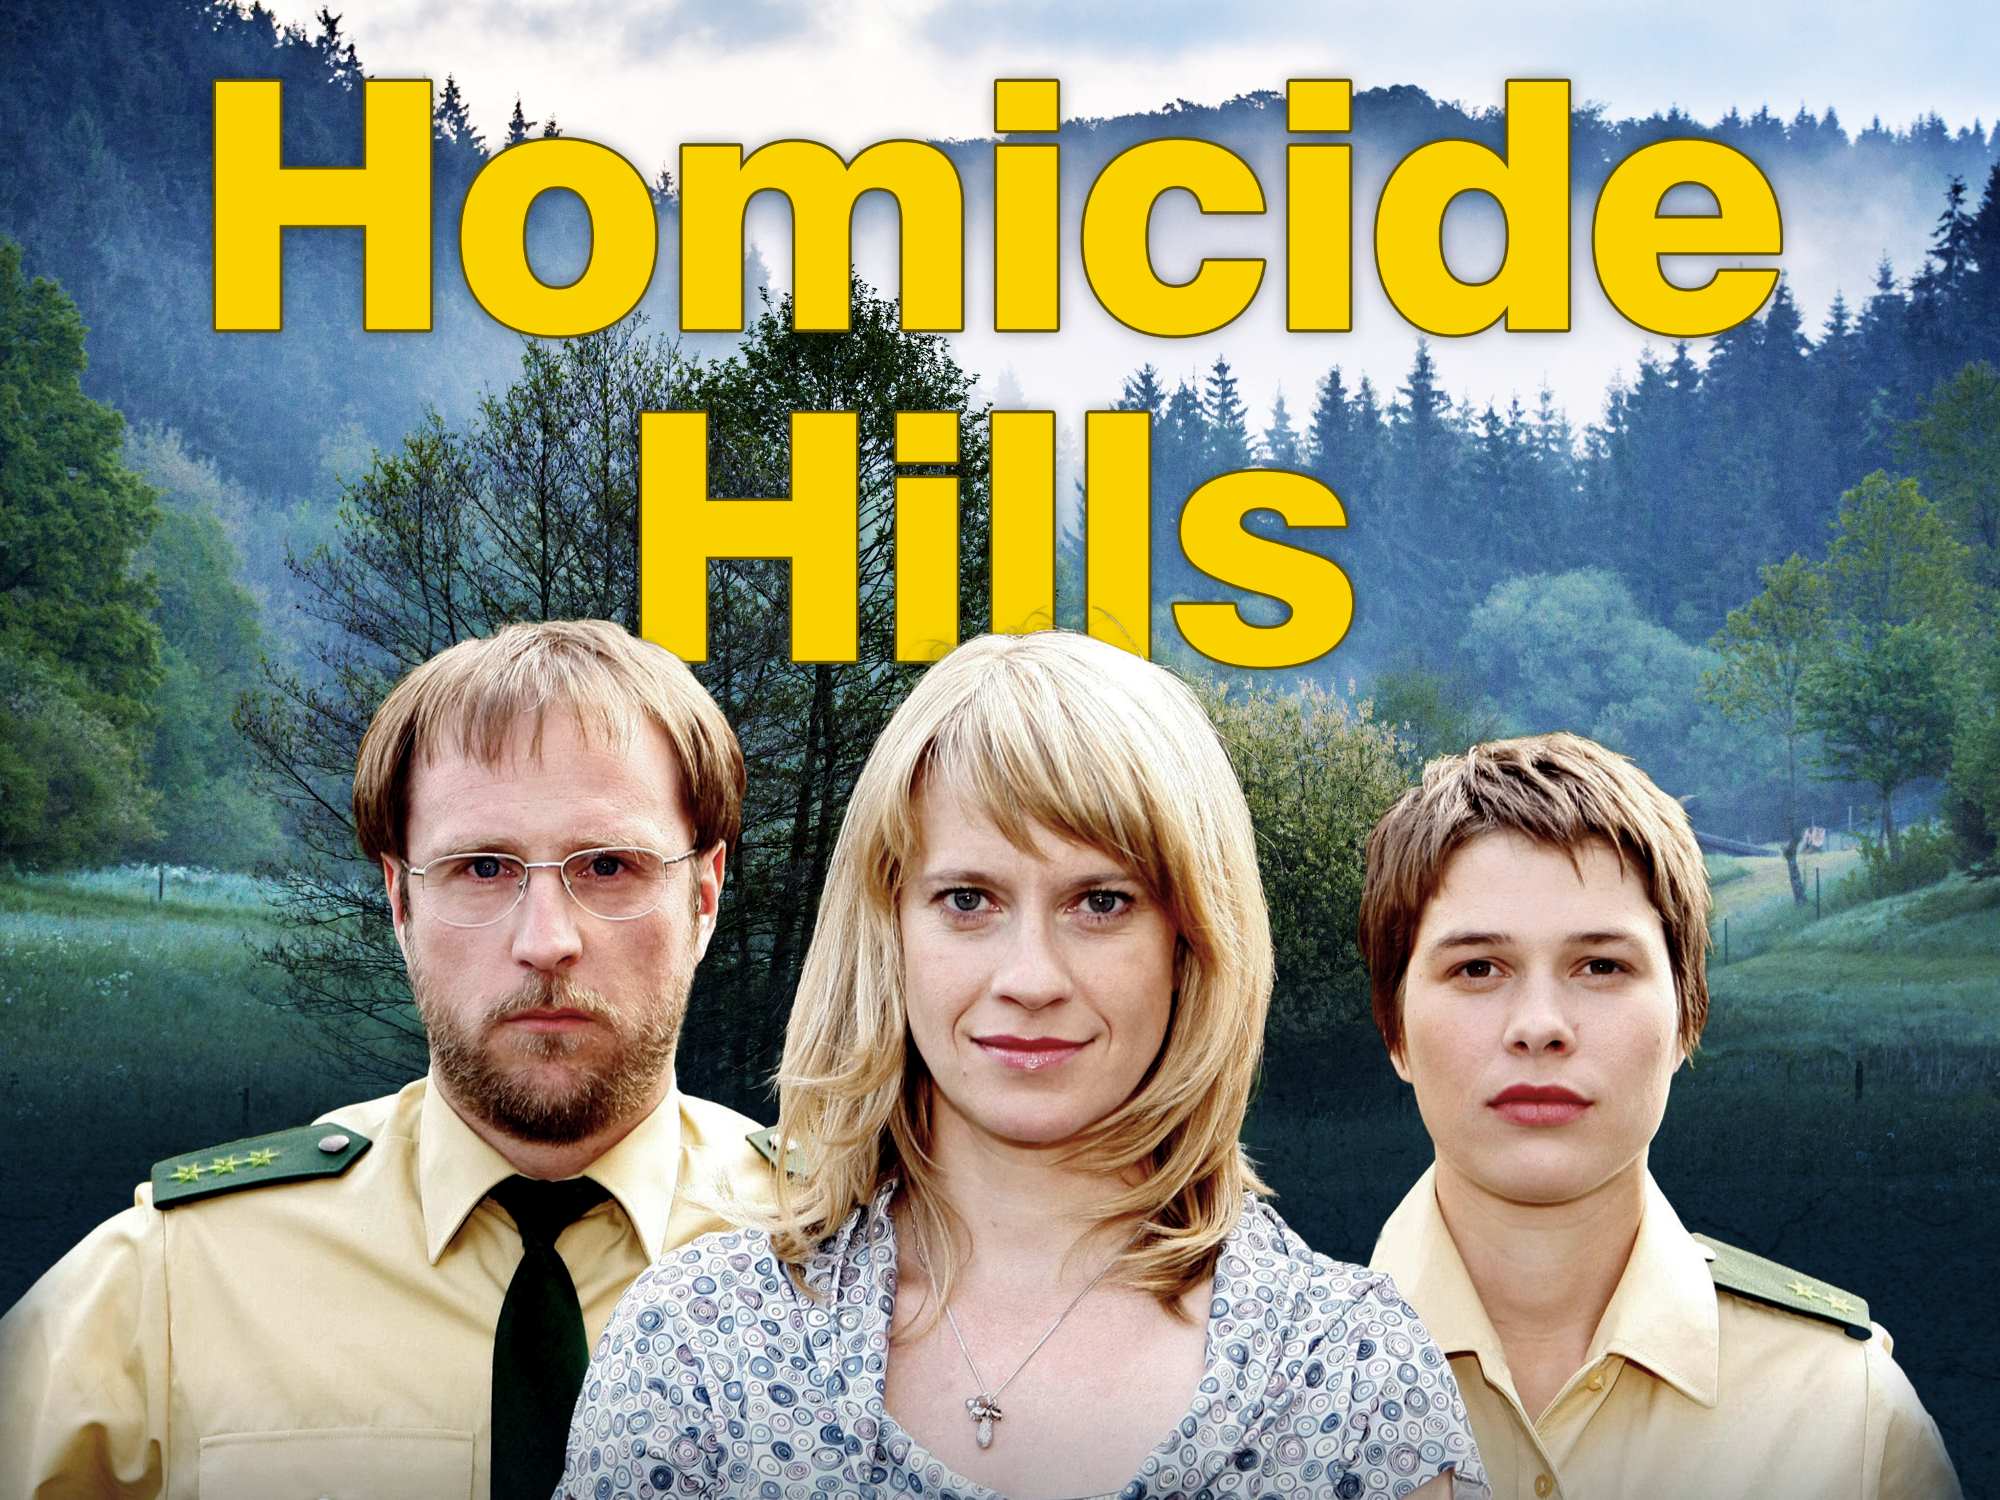 Homicide Hills HHILLS C small